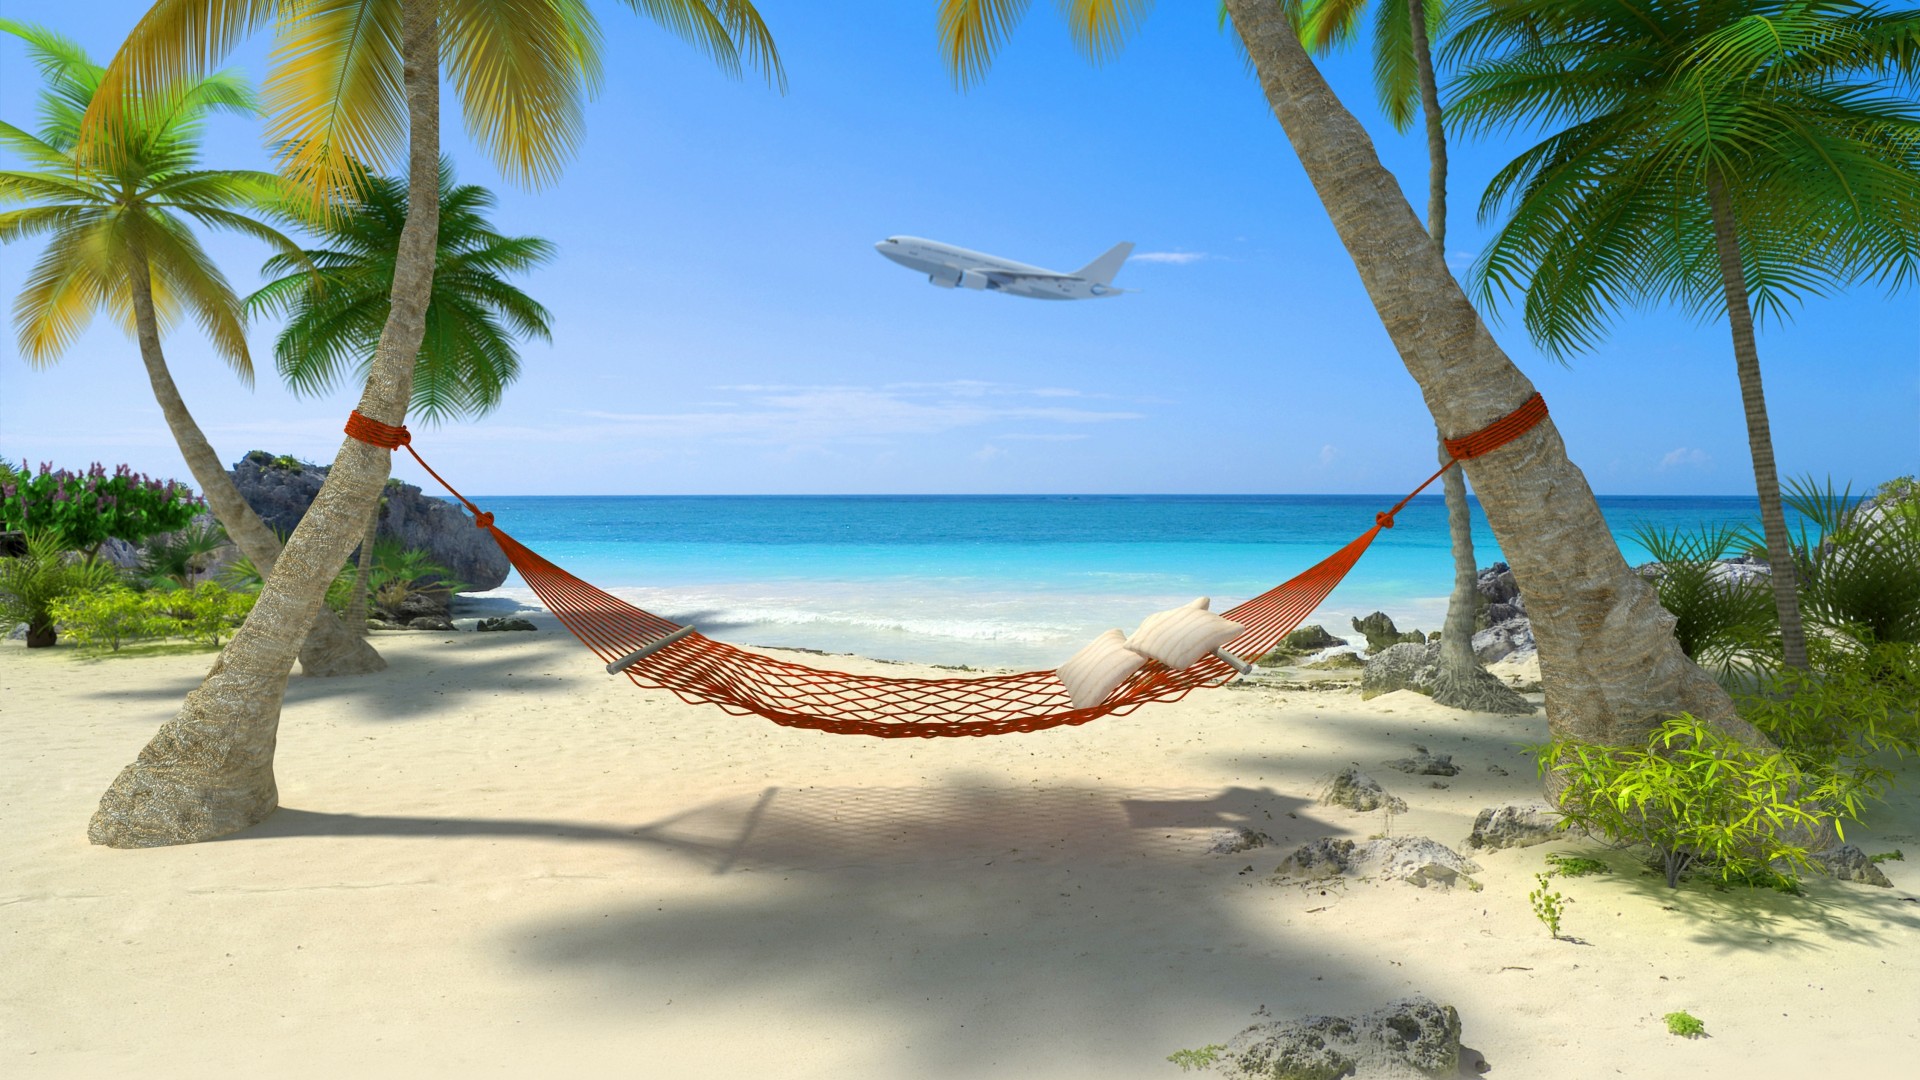 Seaside scenery, coconut trees, hammocks, blue sea, sky, aircraft ...